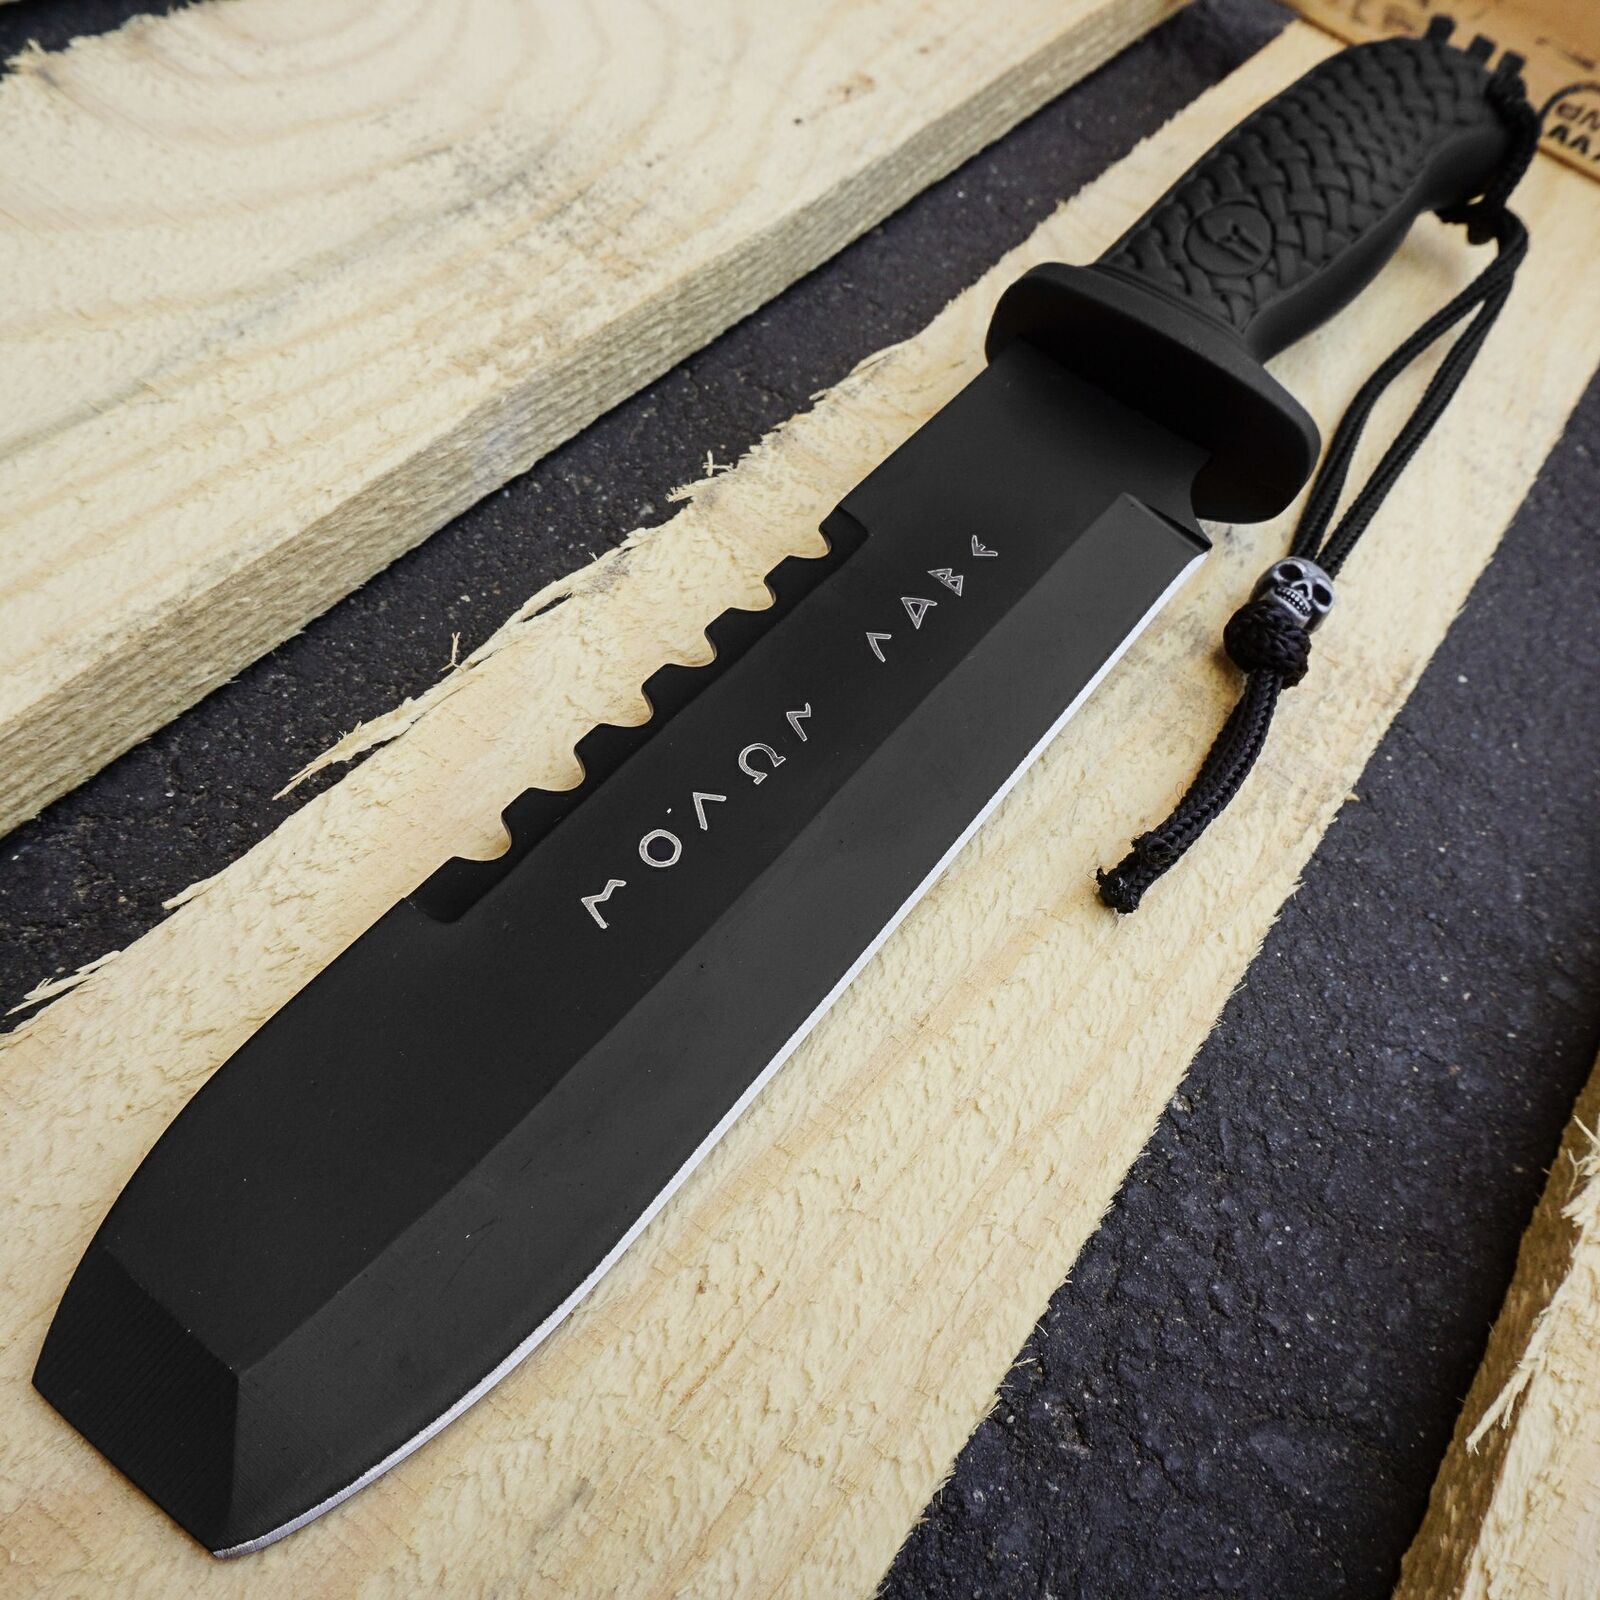 Greek Warrior MOLON LABE Fixed Blade Knife Survival Knife Tactical Black Blade